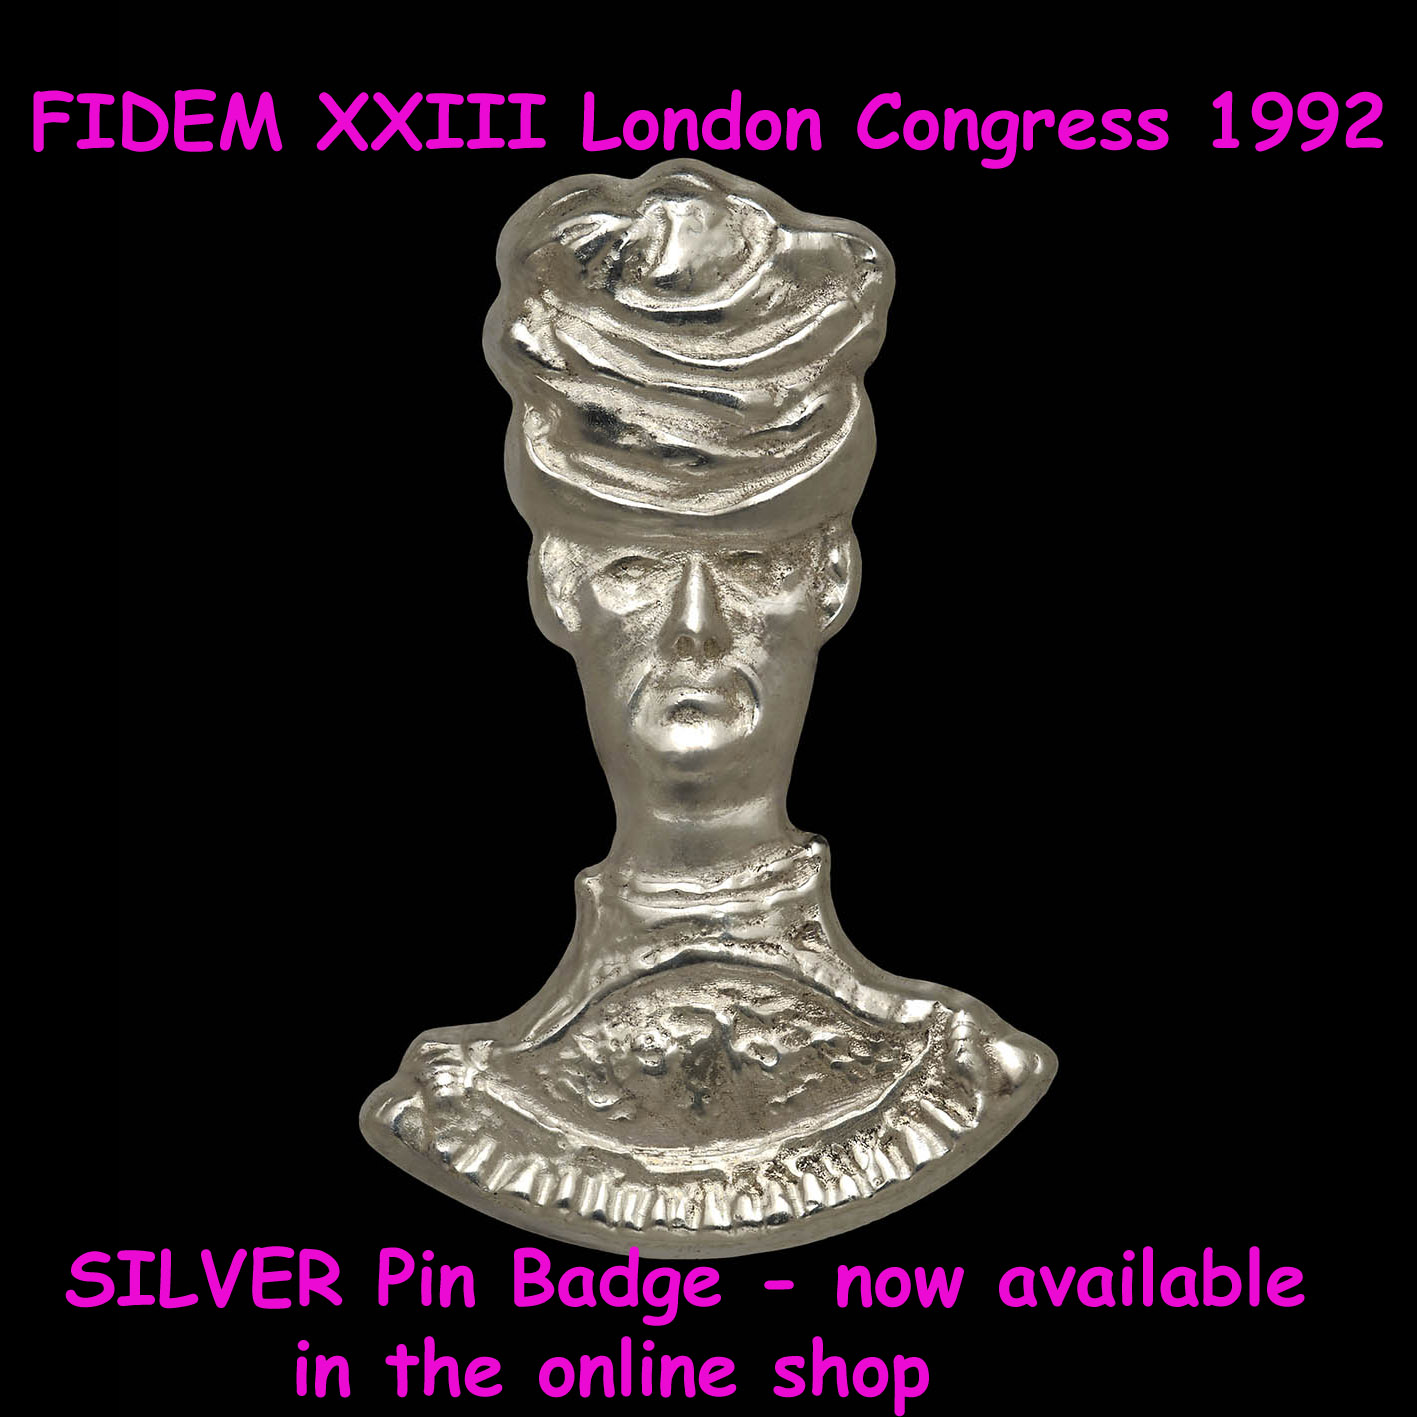 FIDEM XXIII London Congress Silver Pin